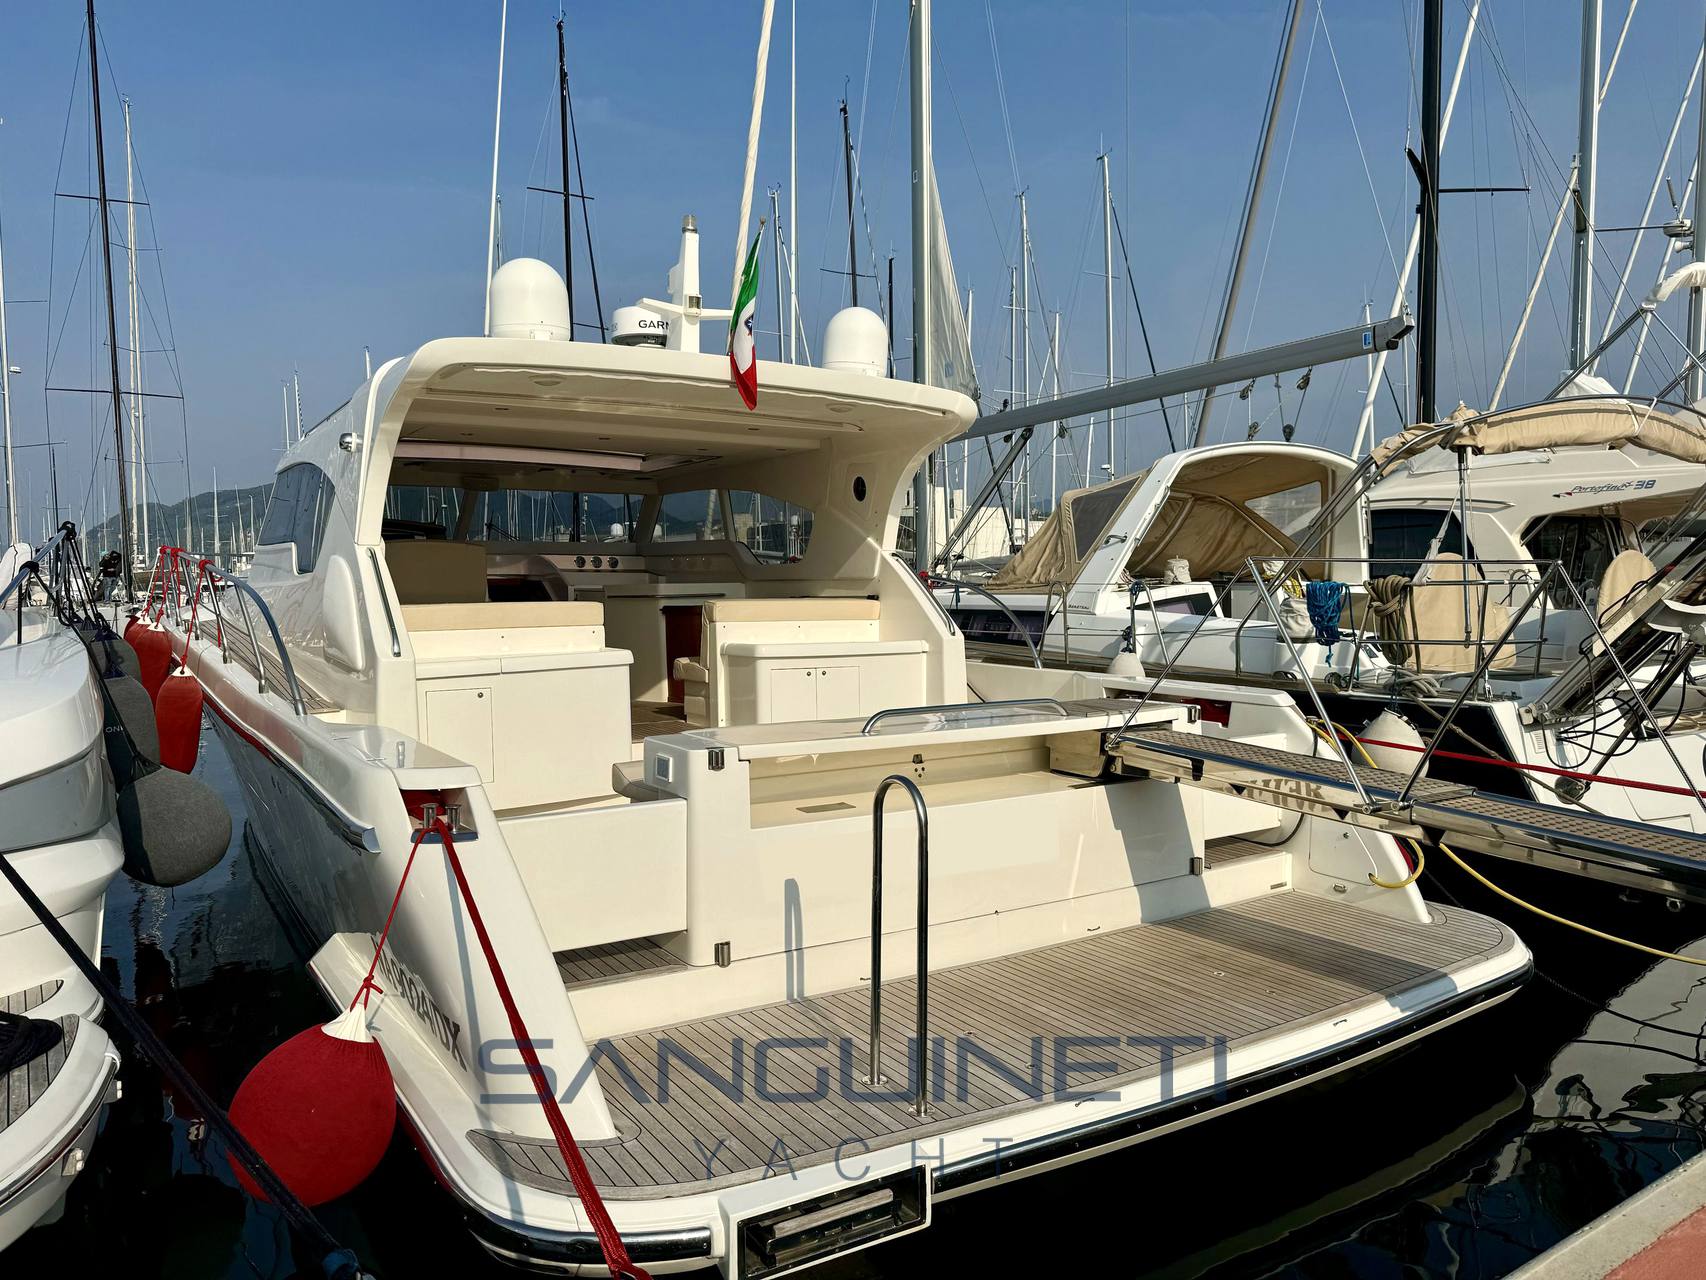 Gagliotta 52 Barco de motor usado para venta